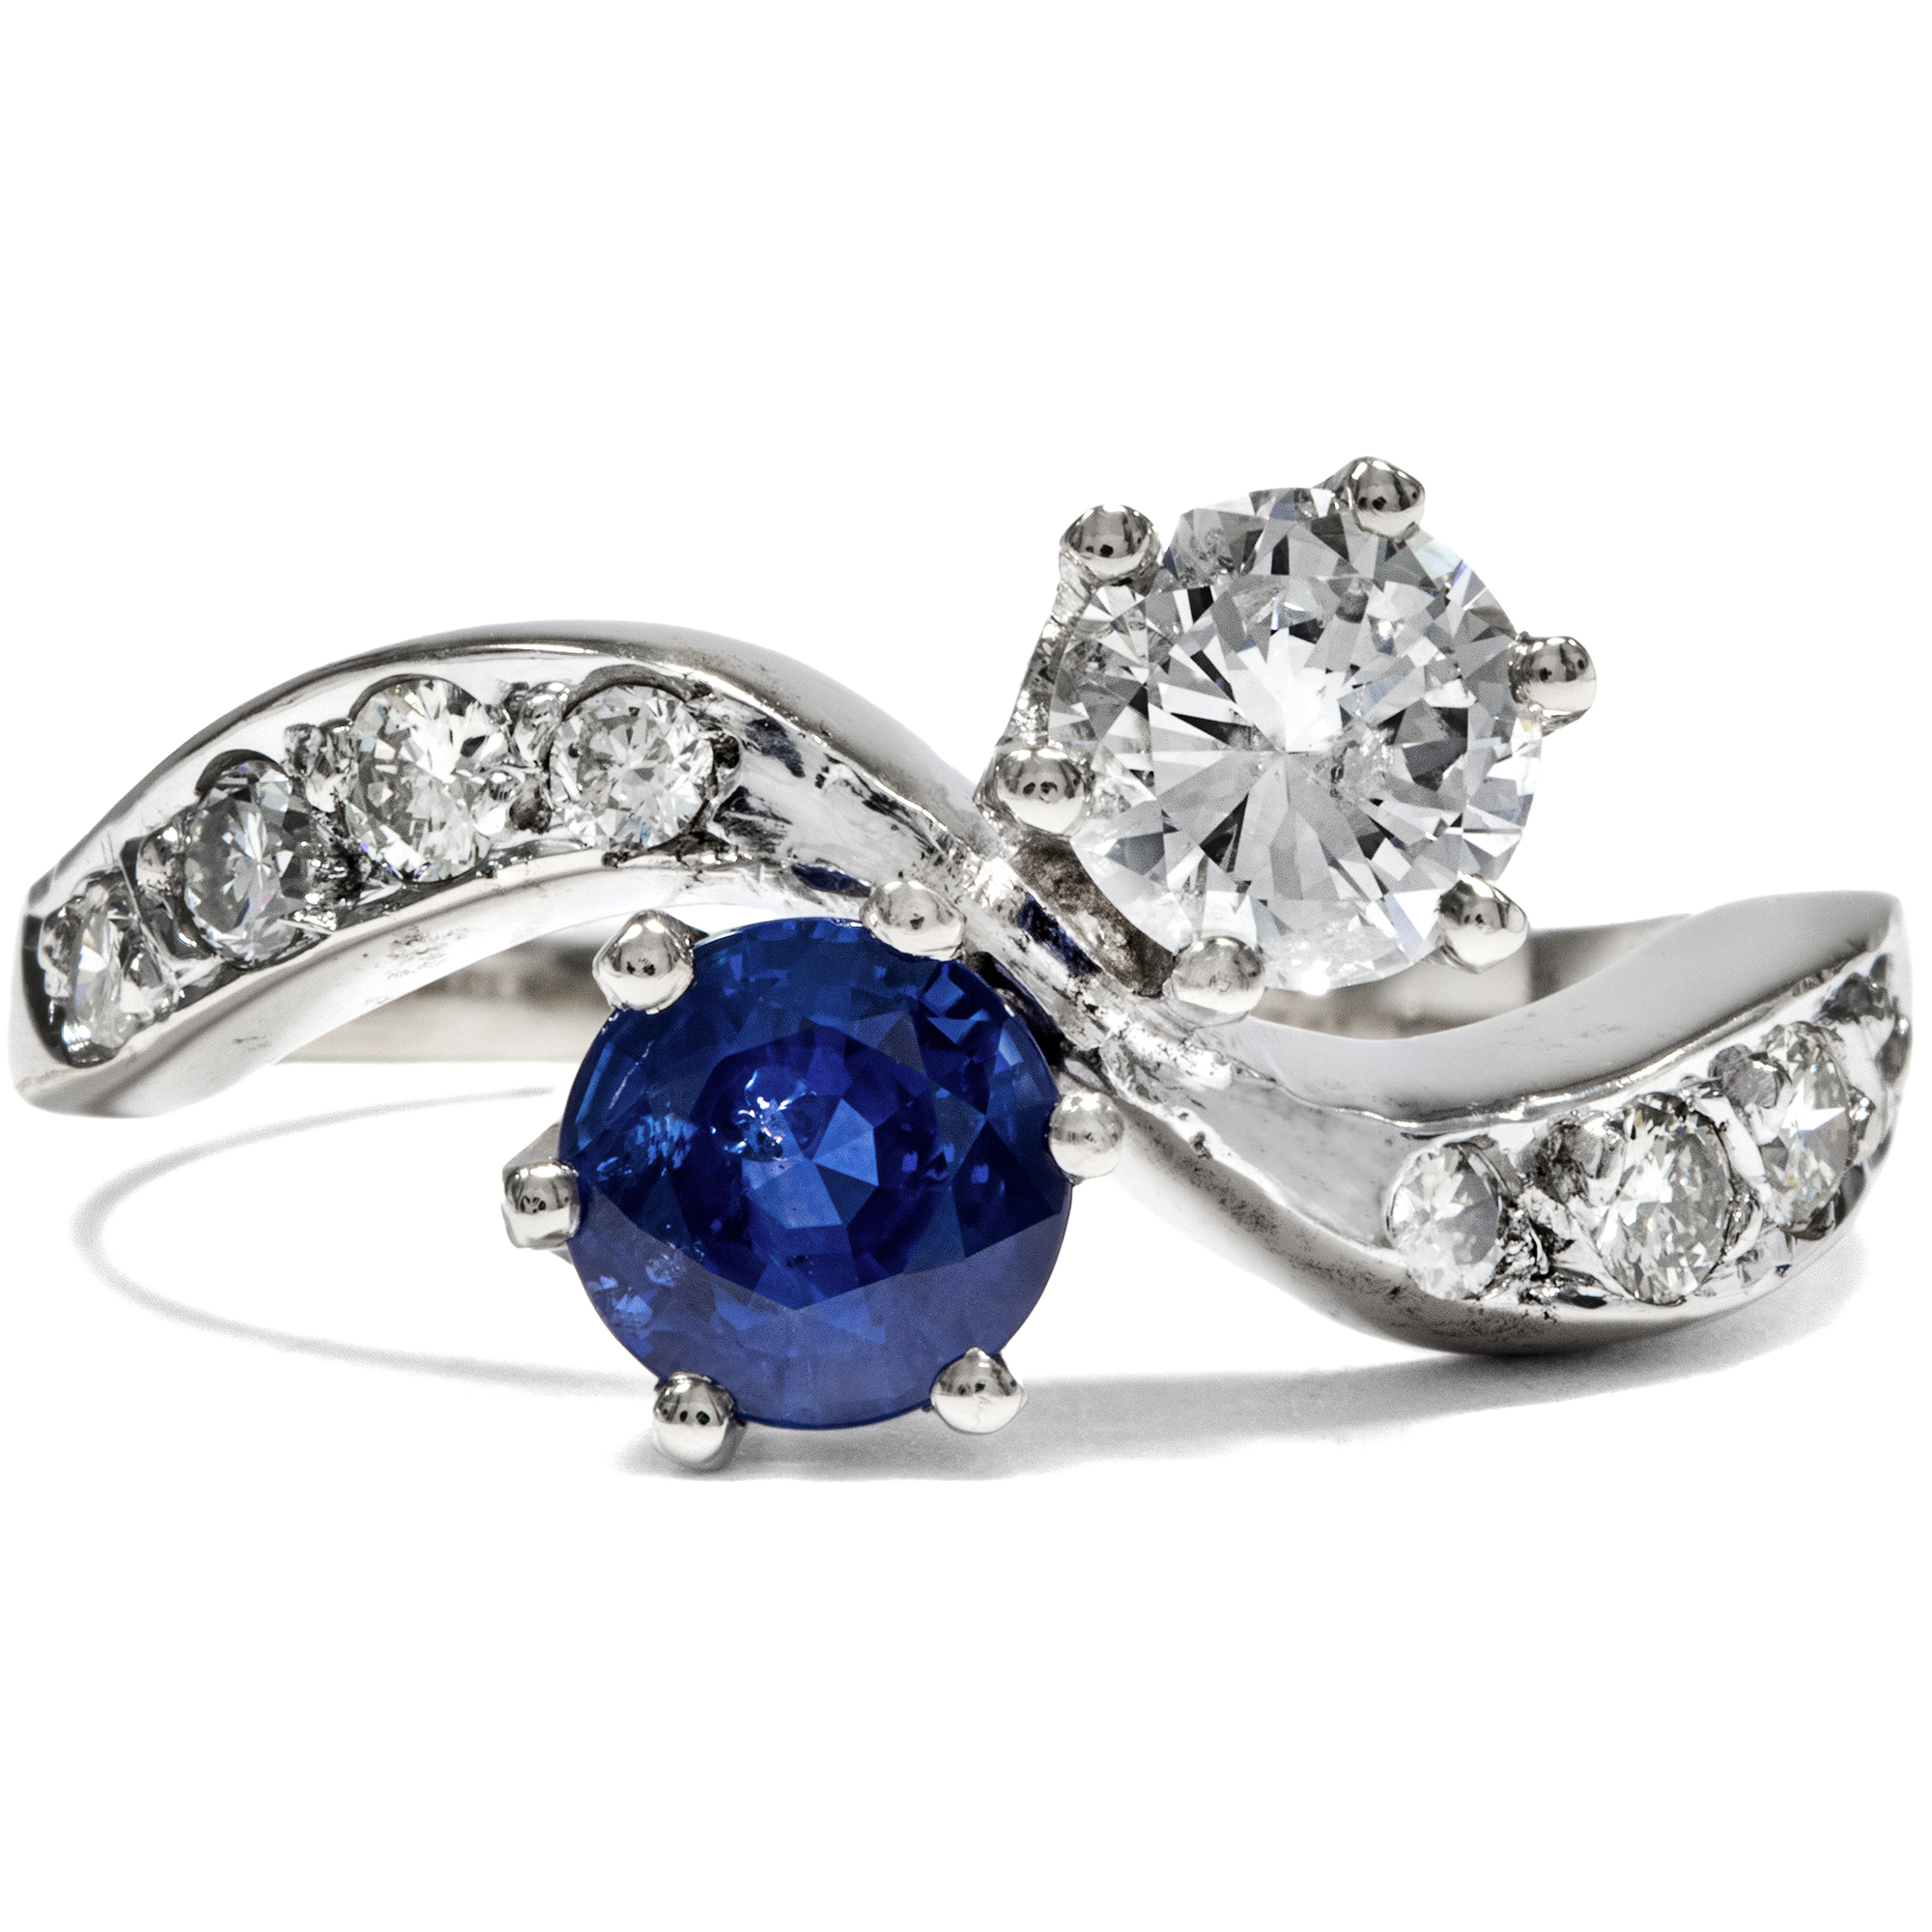 Vintage Toi-et-moi Ring with Diamonds & Blue Sapphire, c. 1970